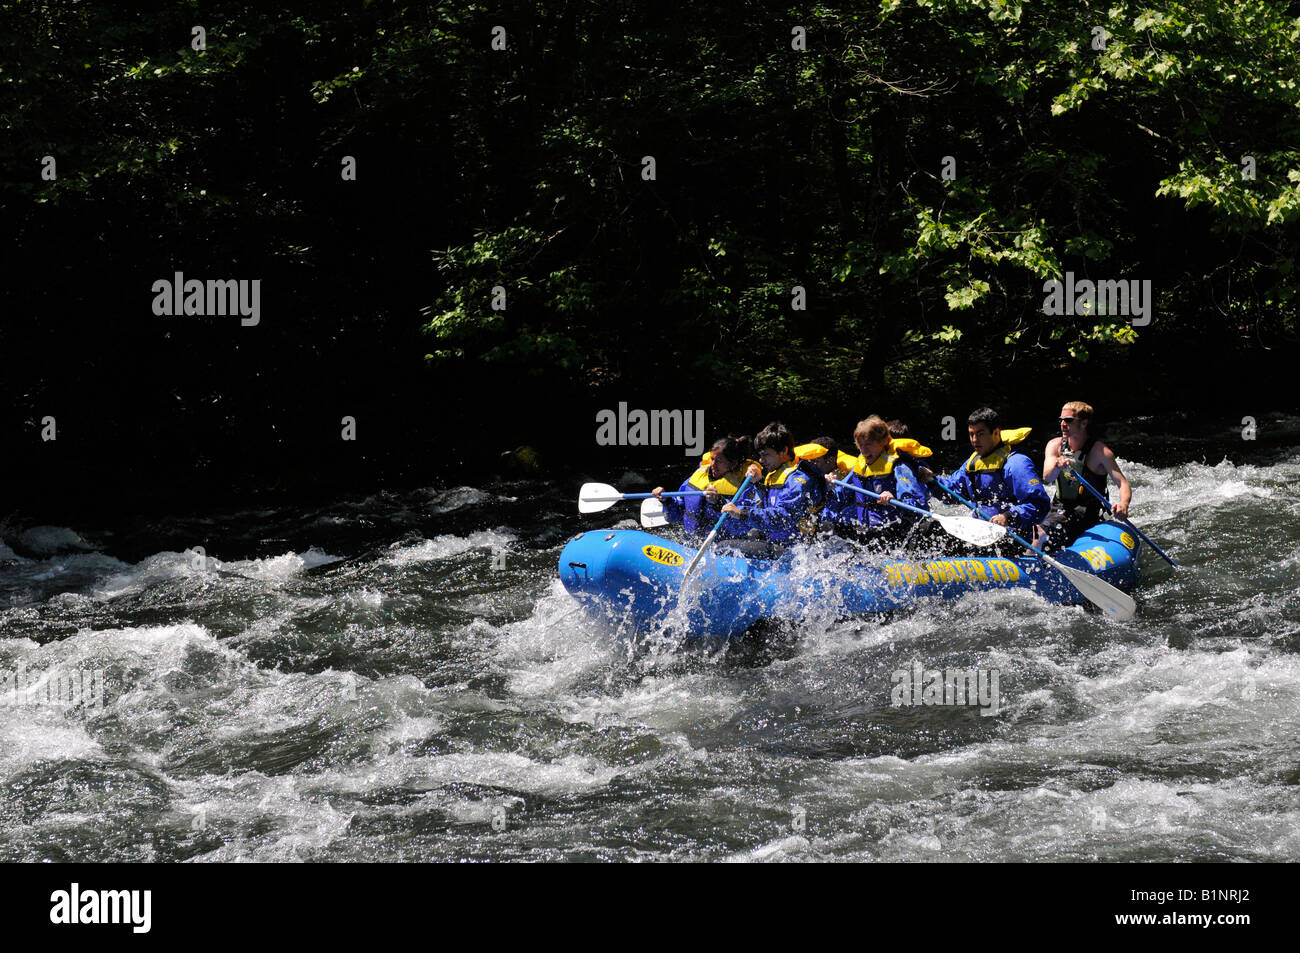 A group River rafting down the Nantahala river in North Carolina, United States of America. Stock Photo